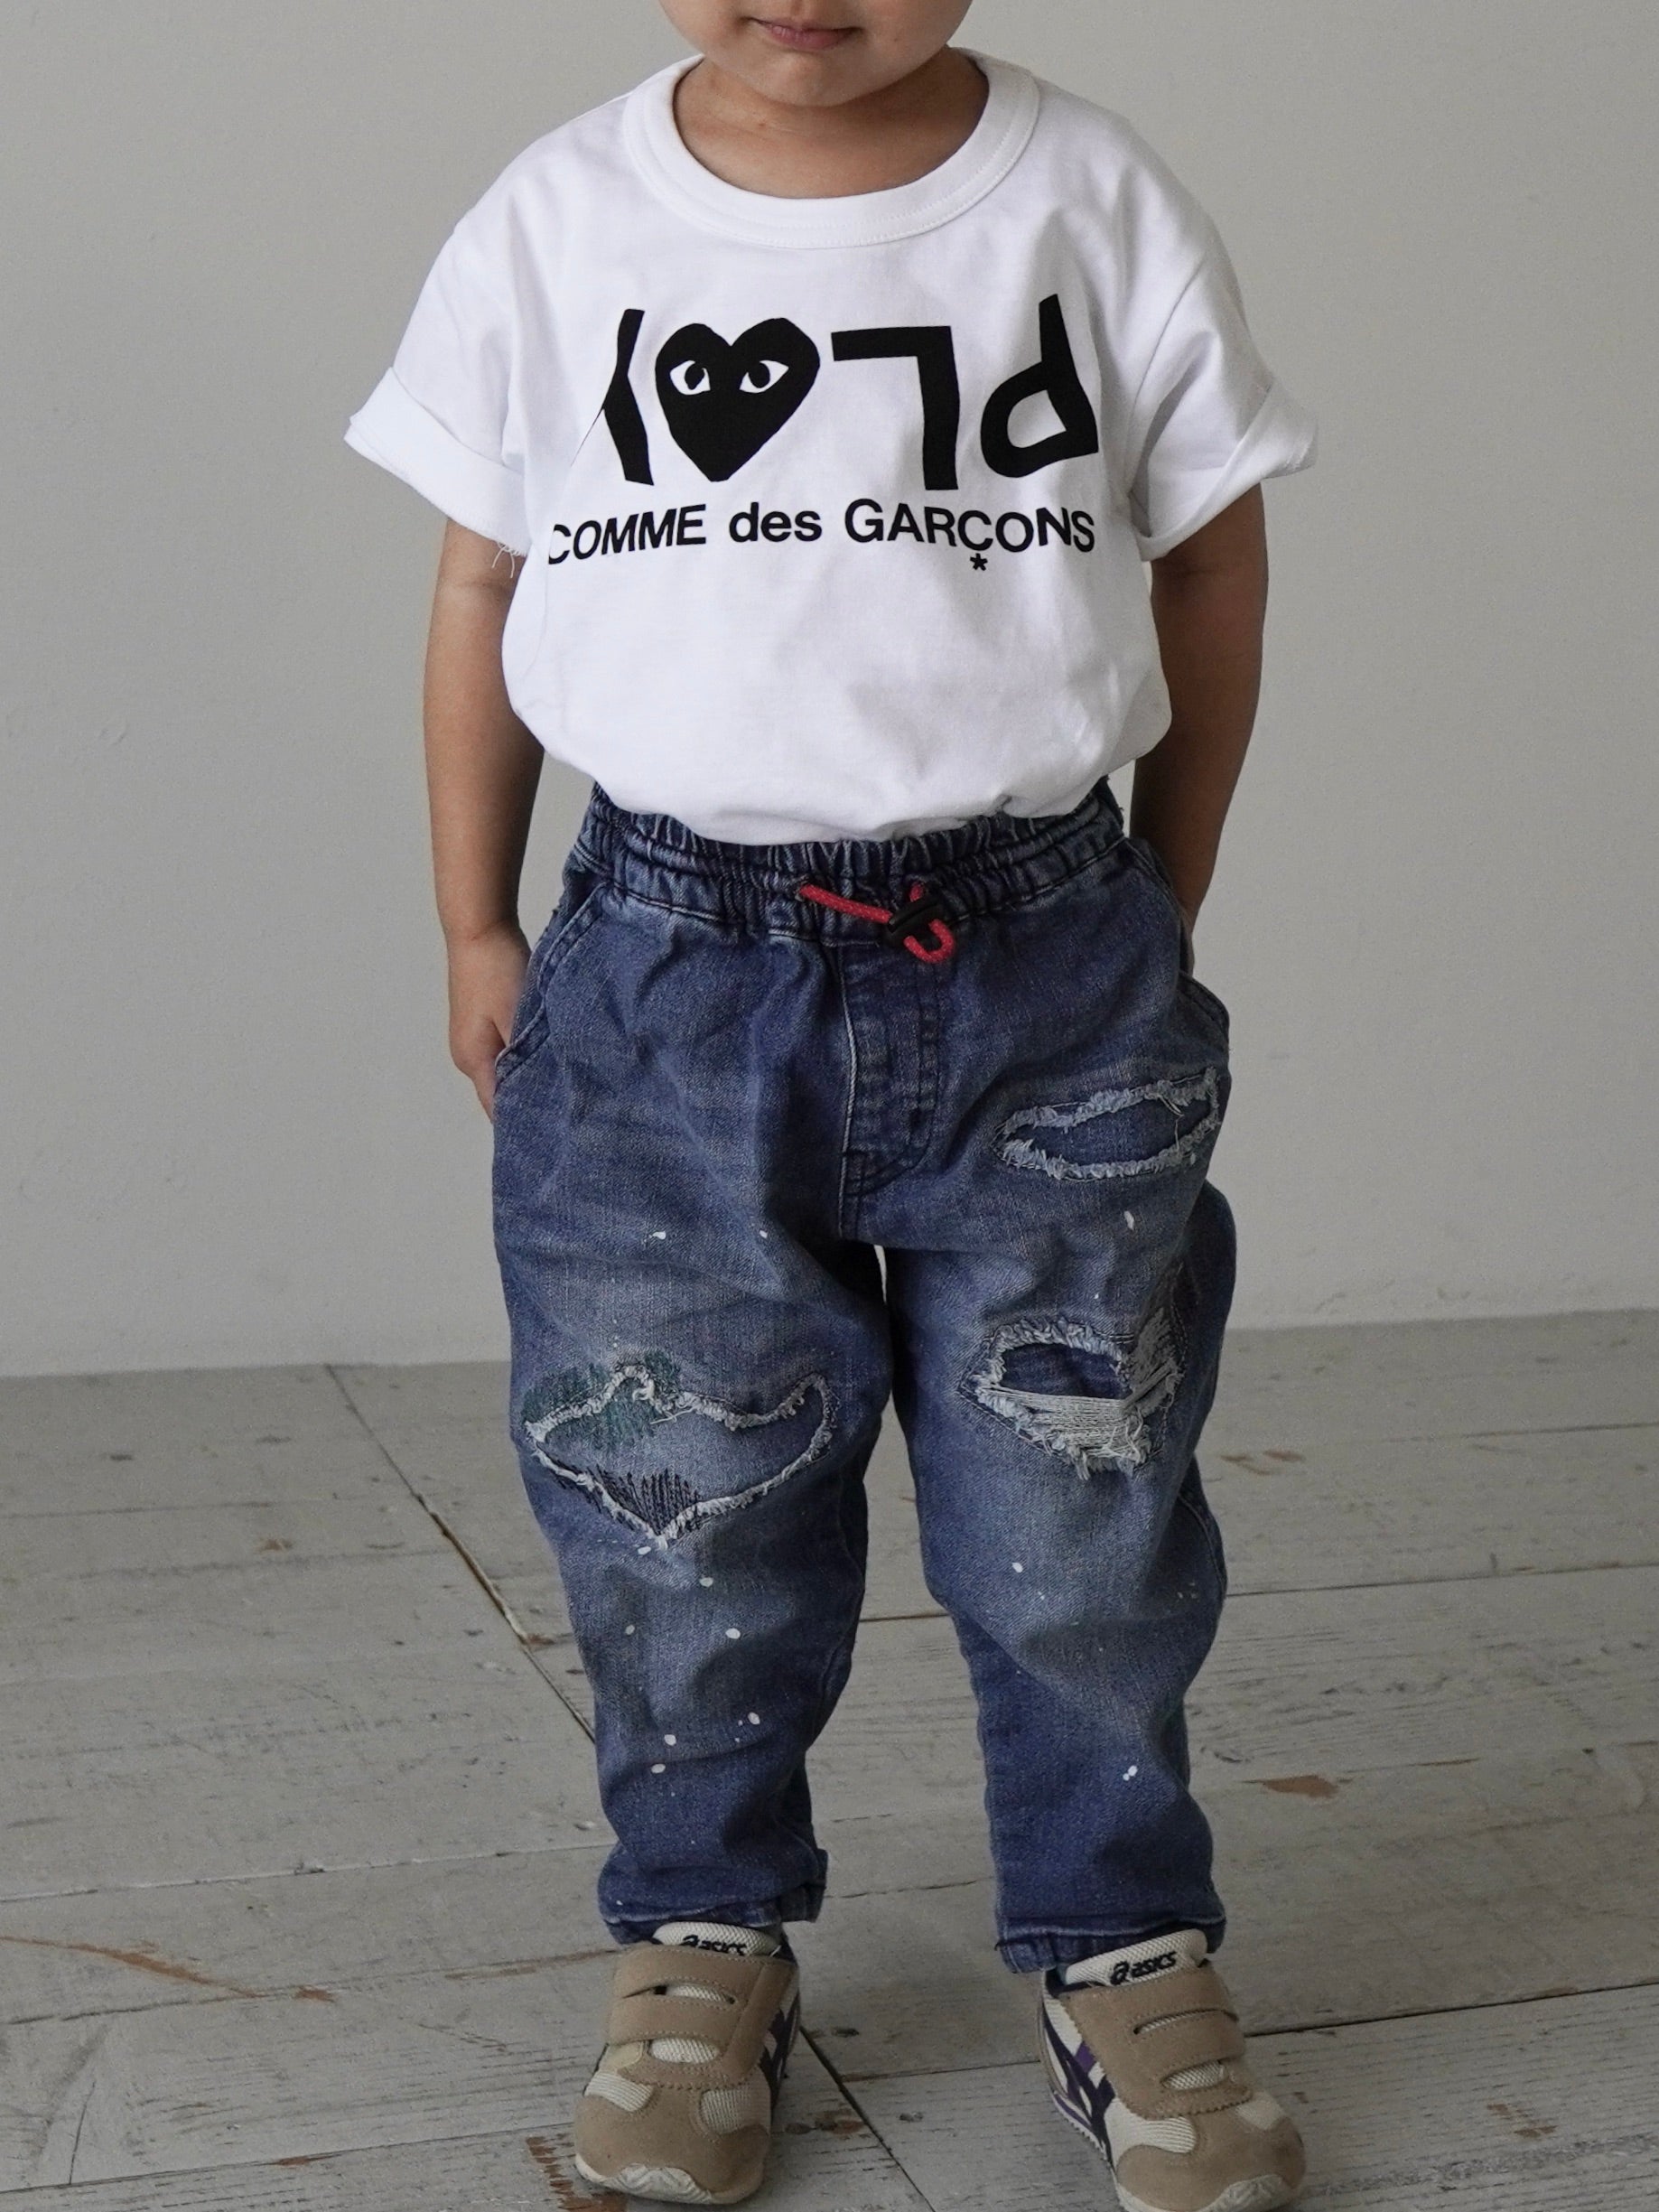 PLAY CDG KIDS' LOGO T-SHIRT キッズTシャツ [AZ-T567-100]